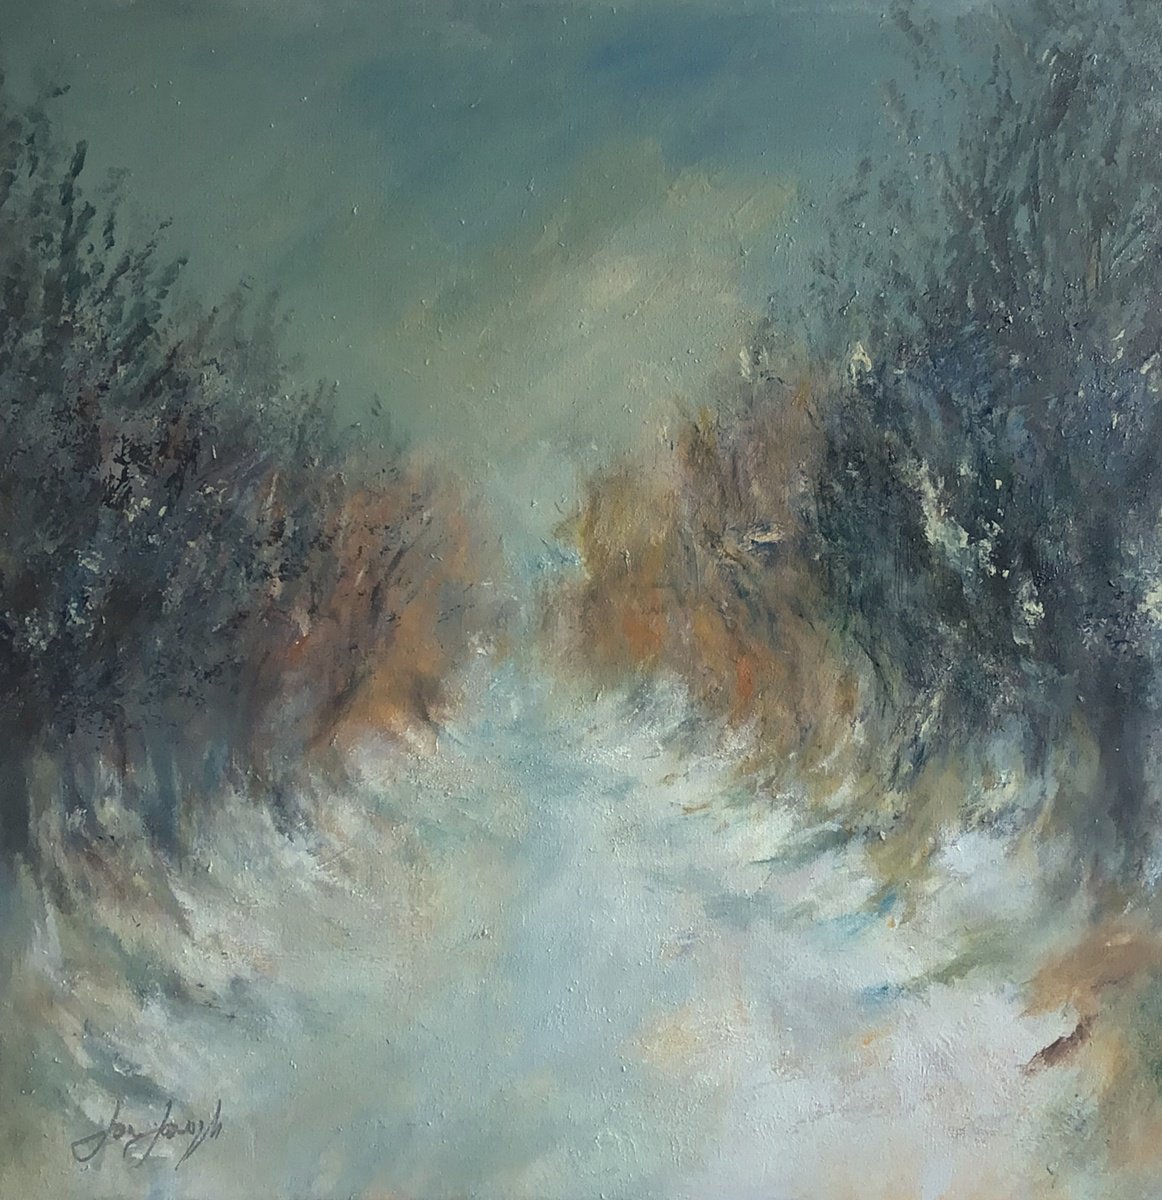 Winter Solstice - Original painting, 24 x 24 by Jon Joseph